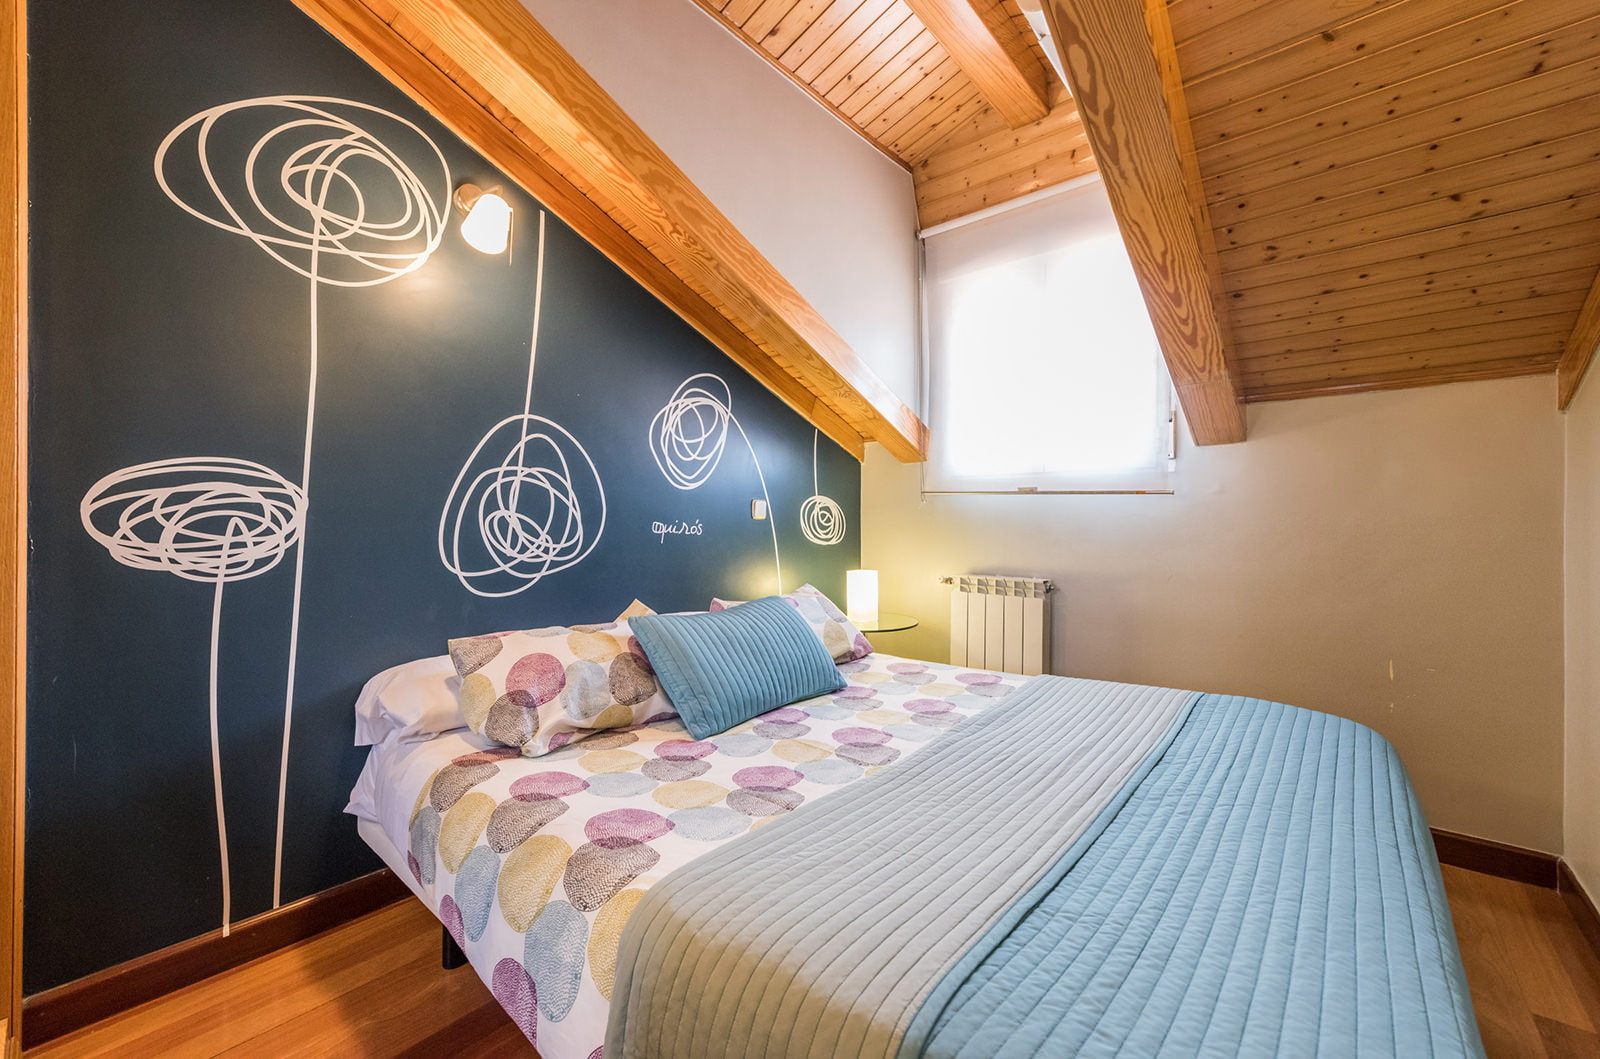 attic bedroom design ideas